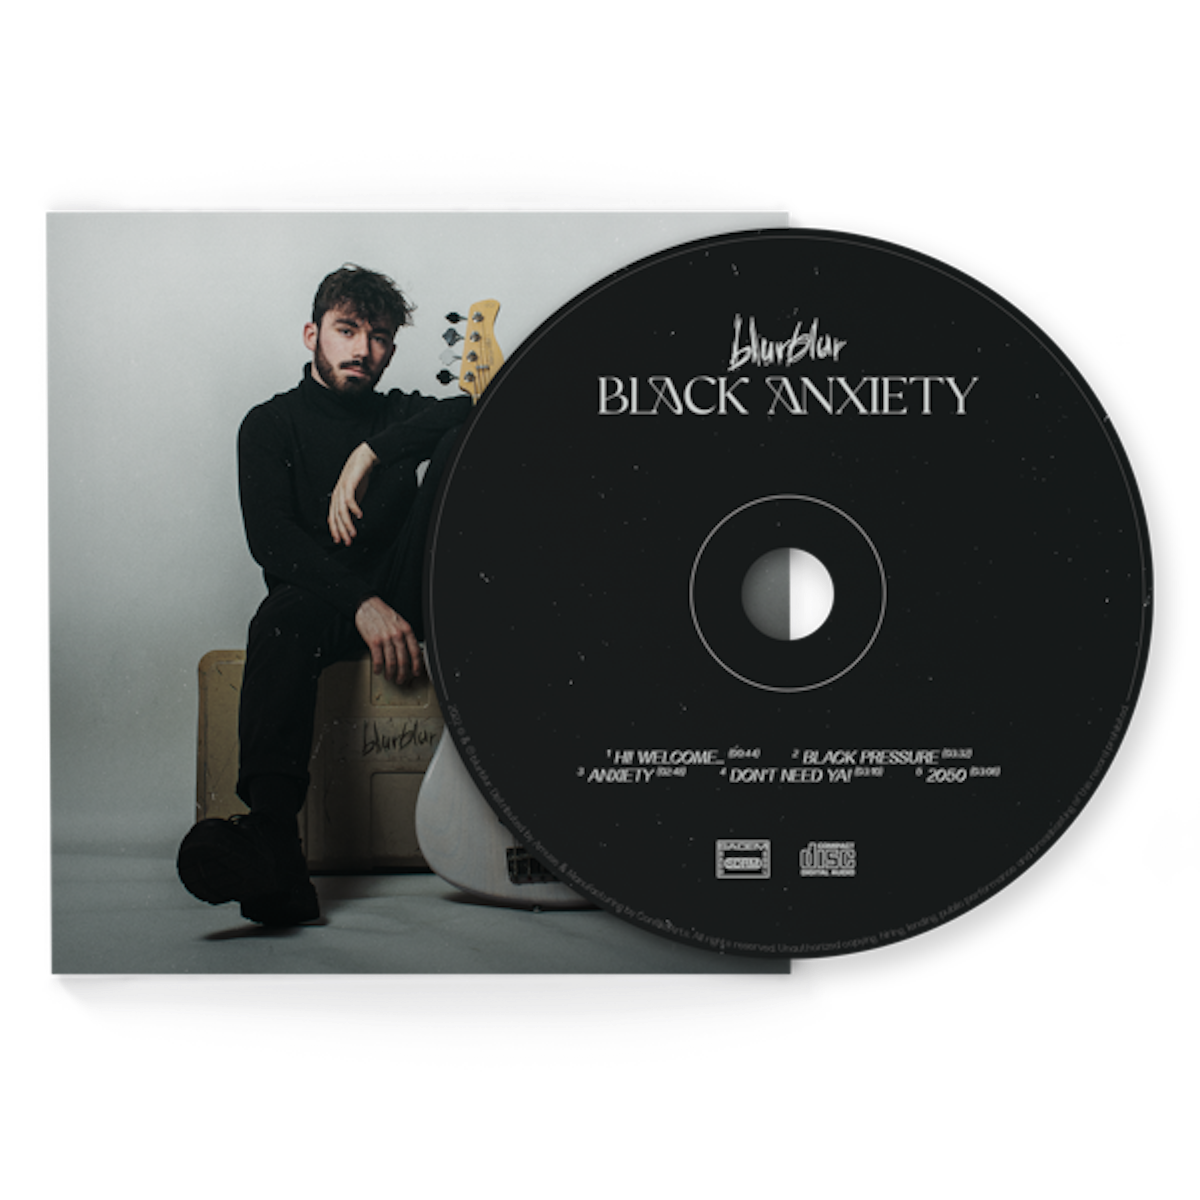 Black Anxiety CD